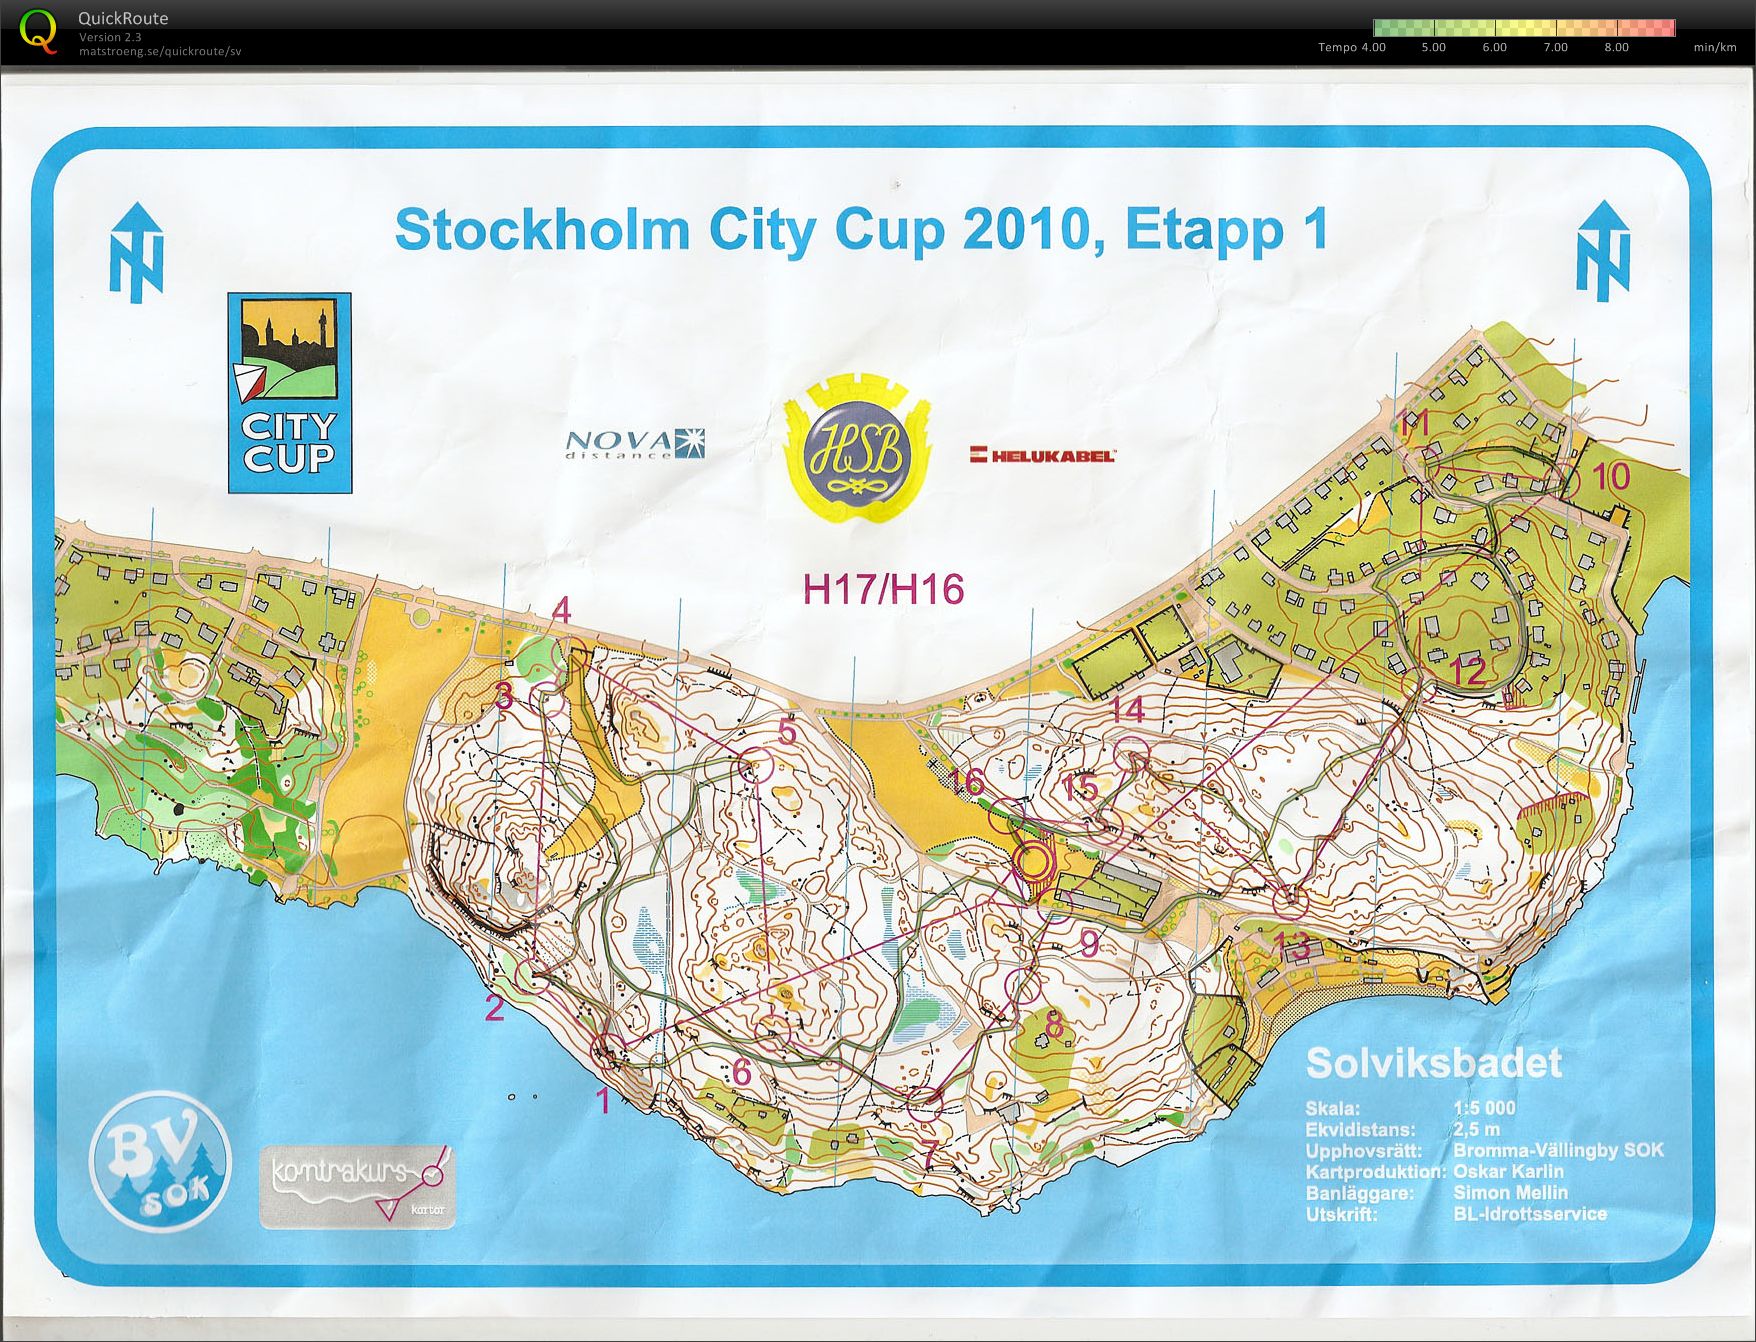 Stockholm City Cup, etapp 1 (19-05-2010)